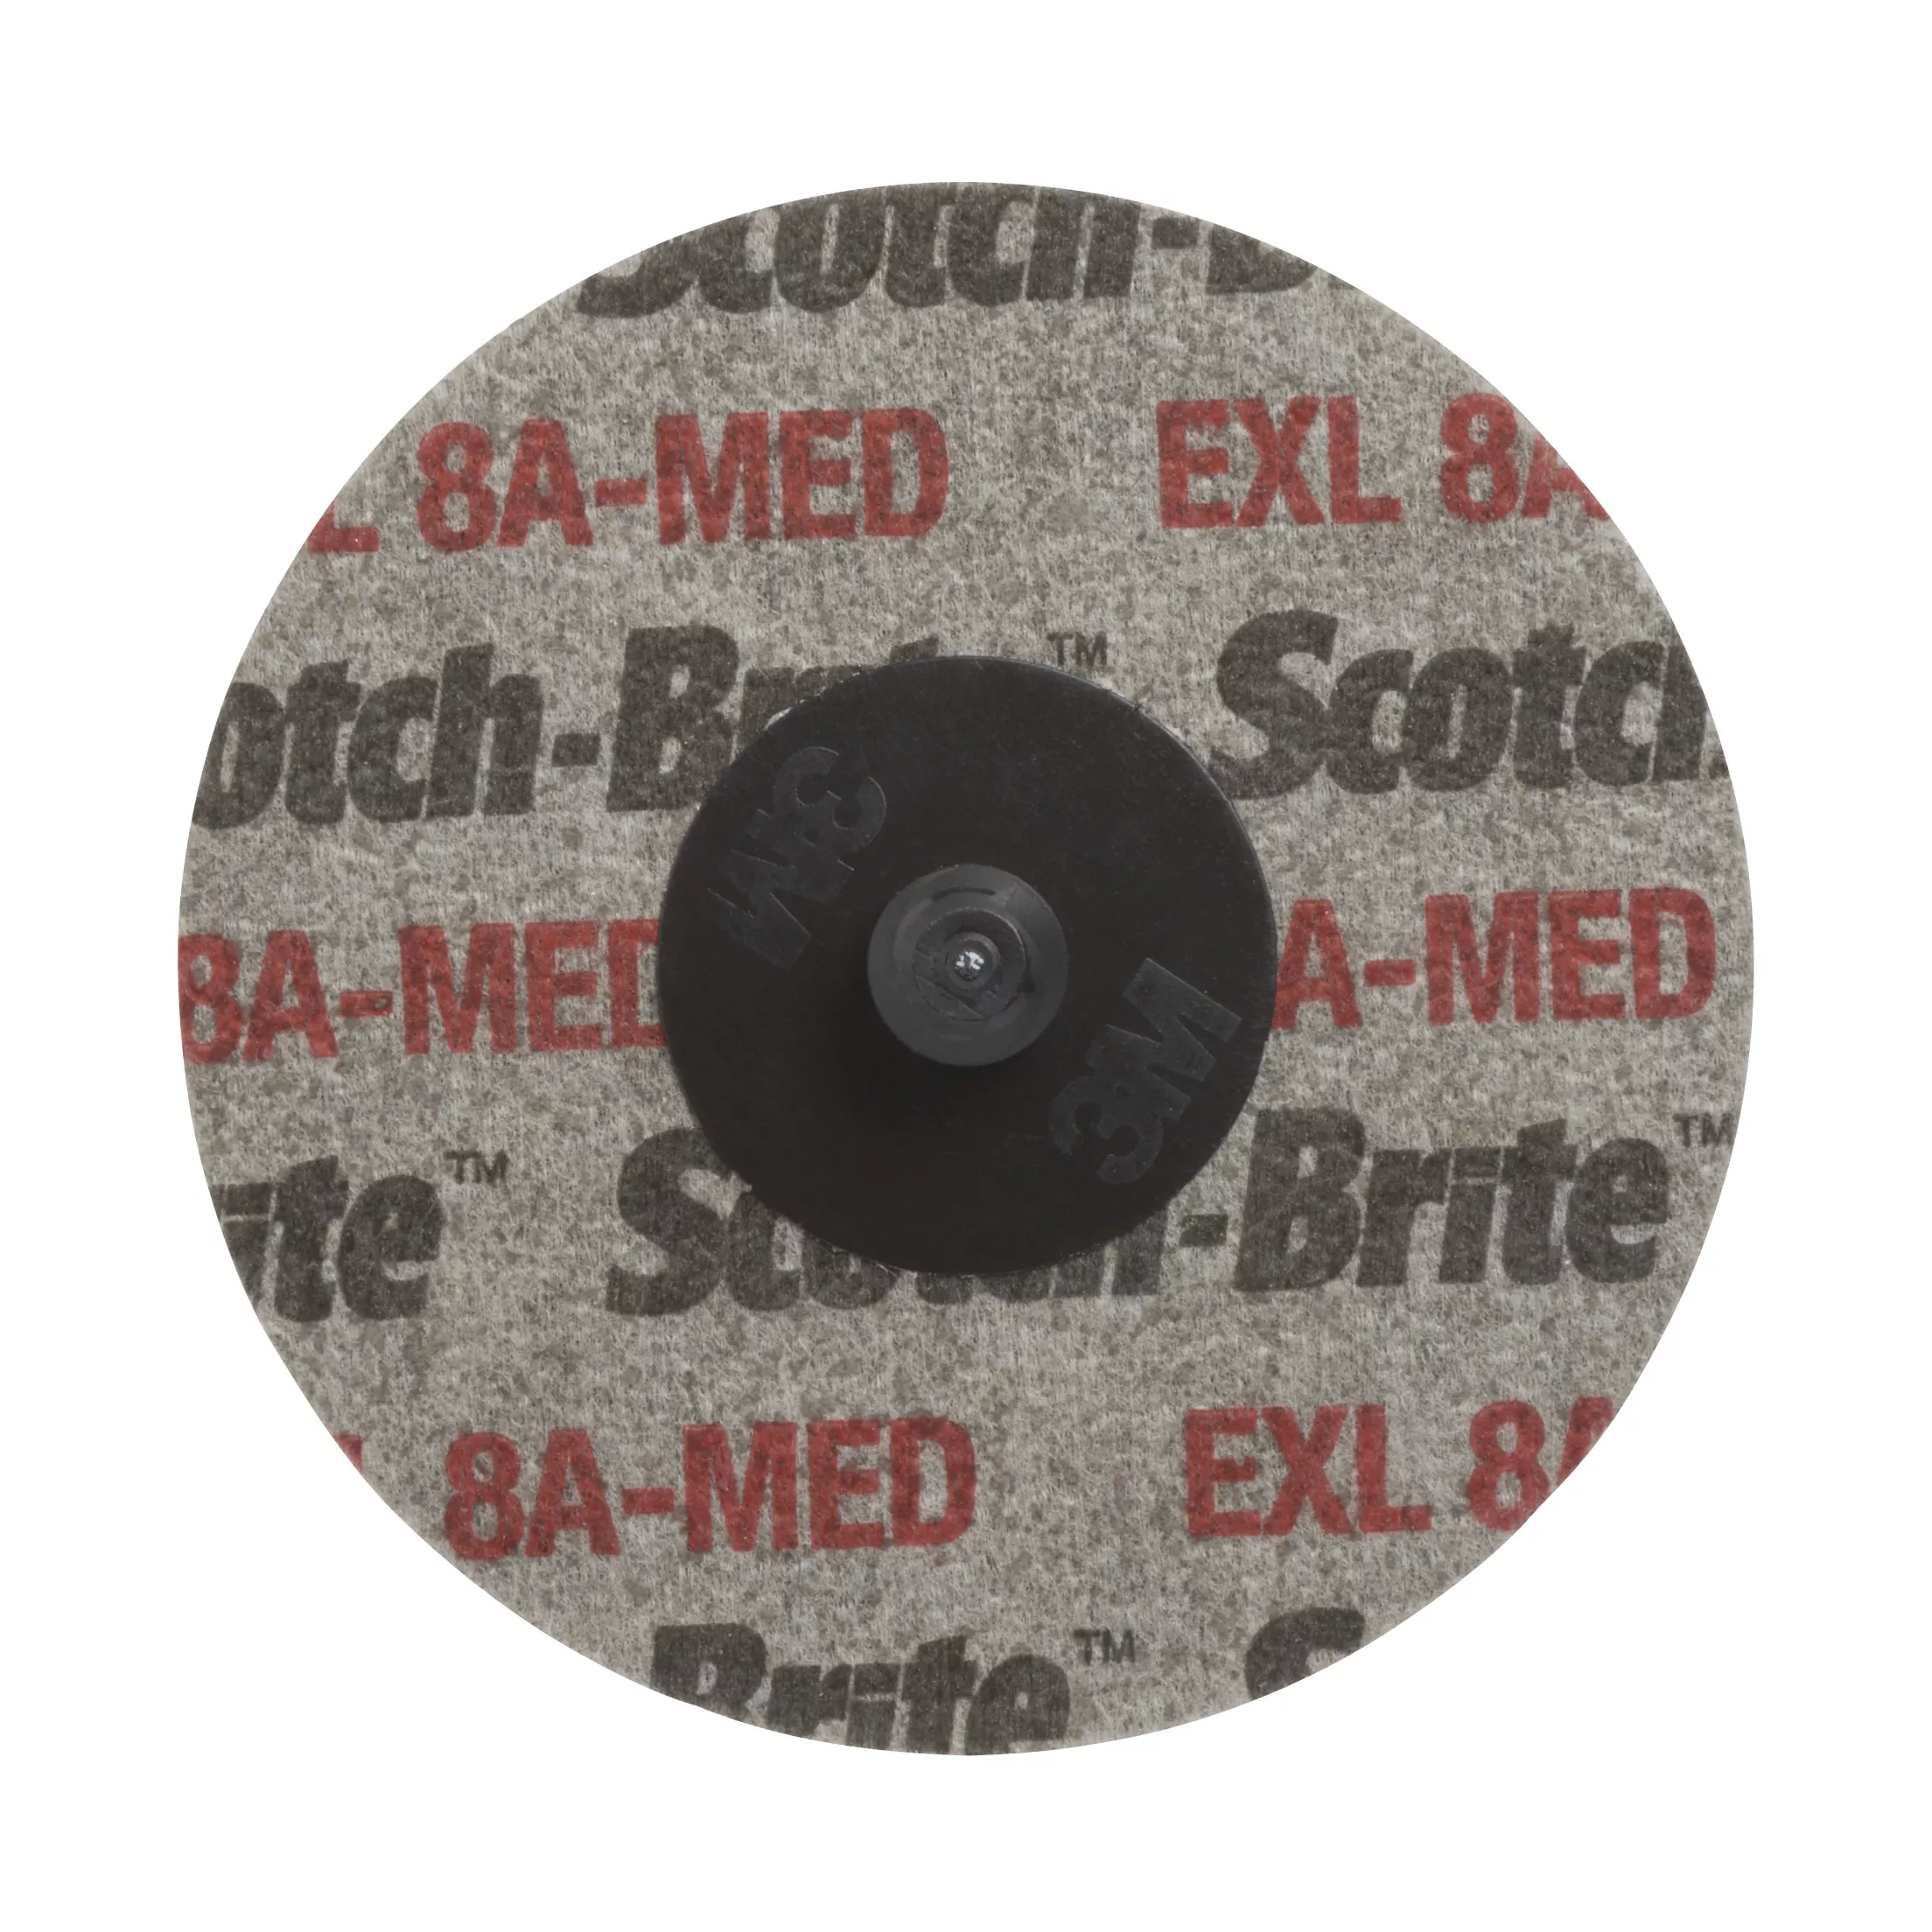 SKU 7000045980 | Scotch-Brite™ Roloc™ EXL Unitized Wheel